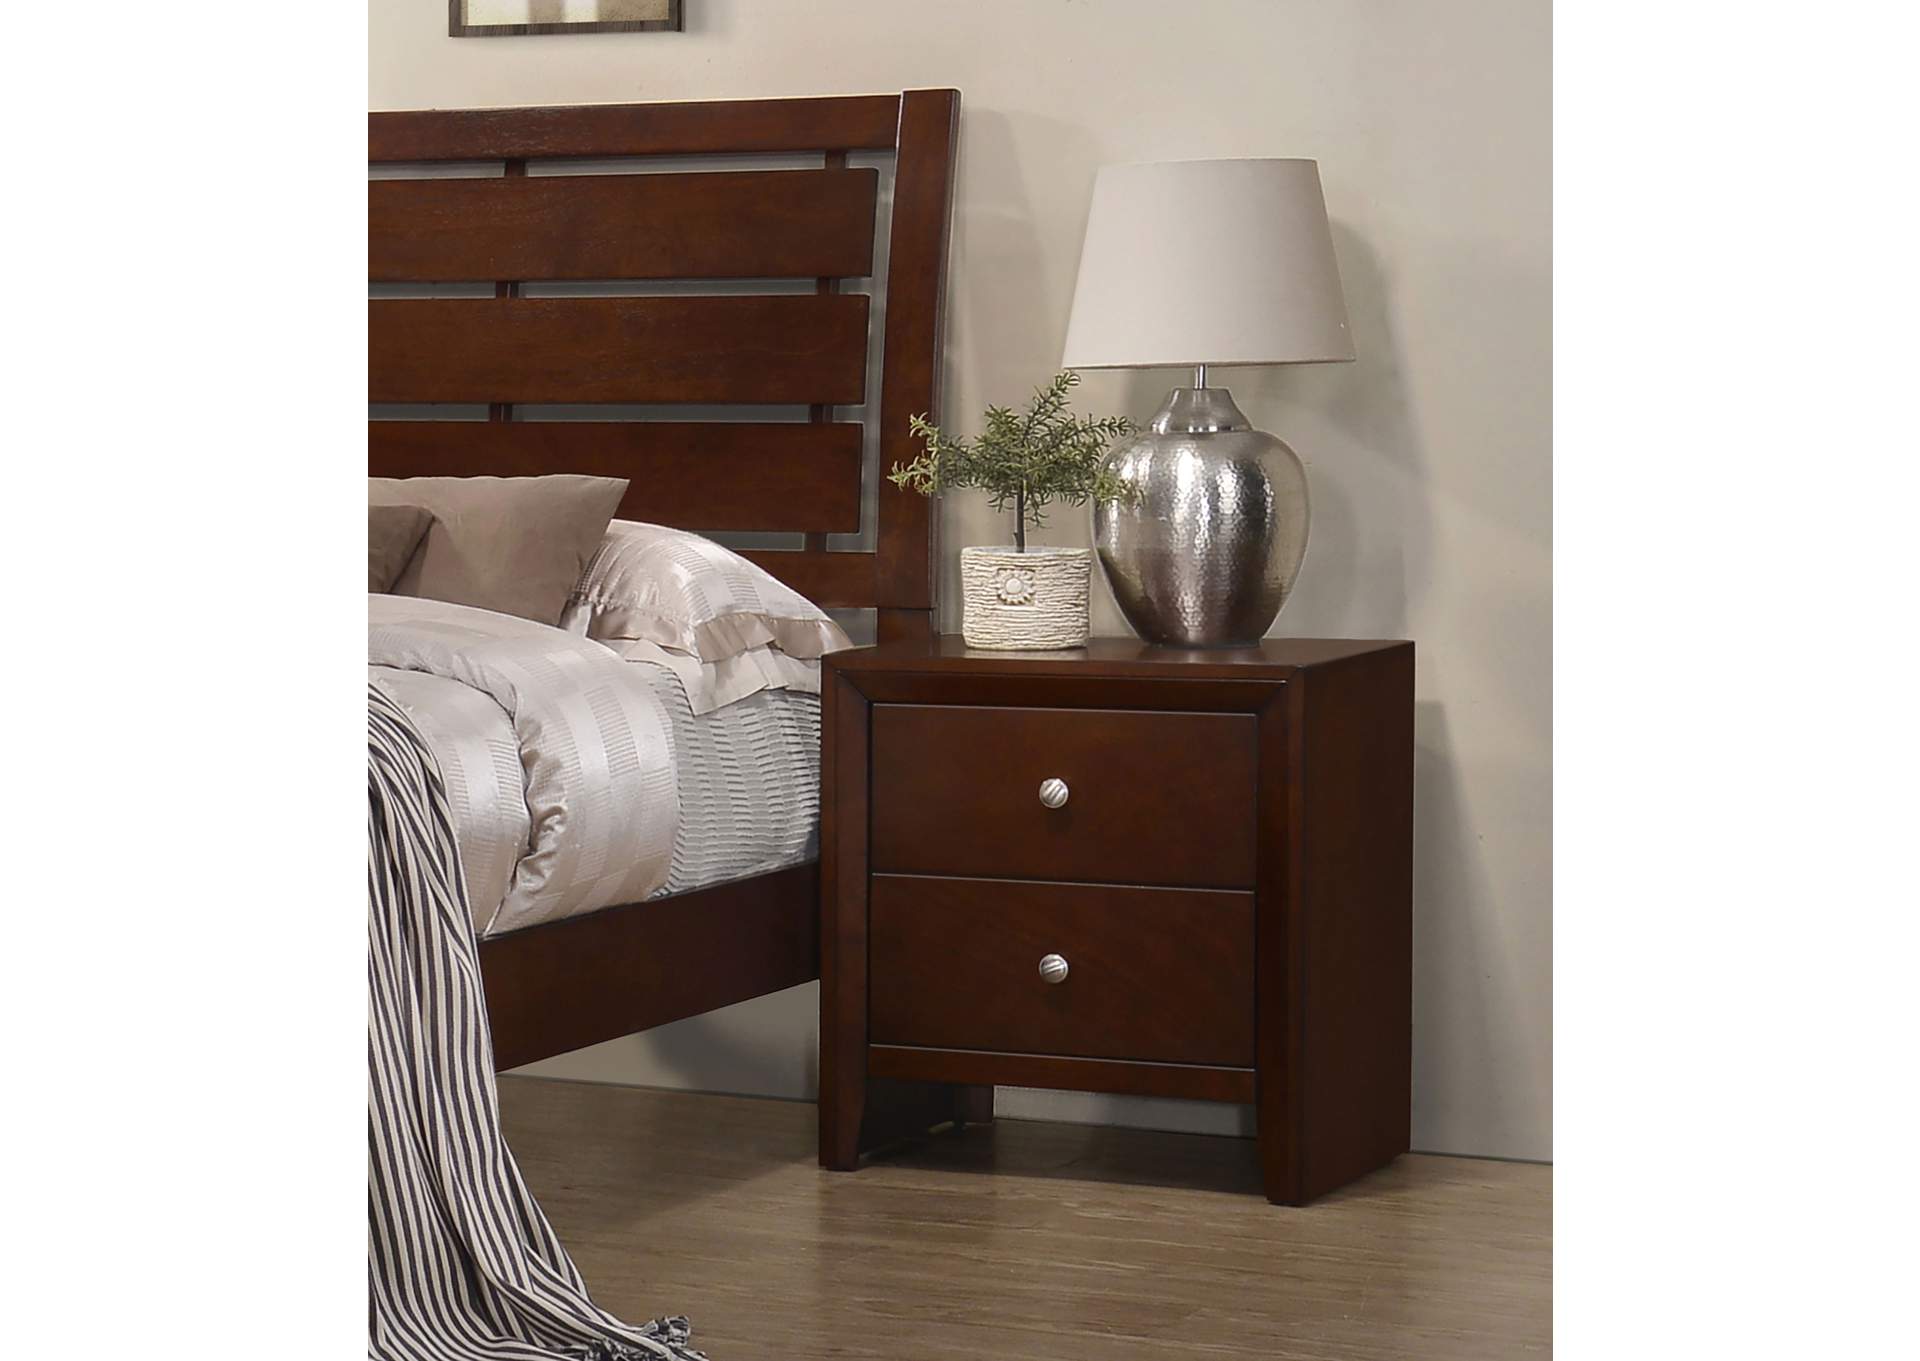 Serenity Rectangular 2-drawer Nightstand Rich Merlot,Coaster Furniture